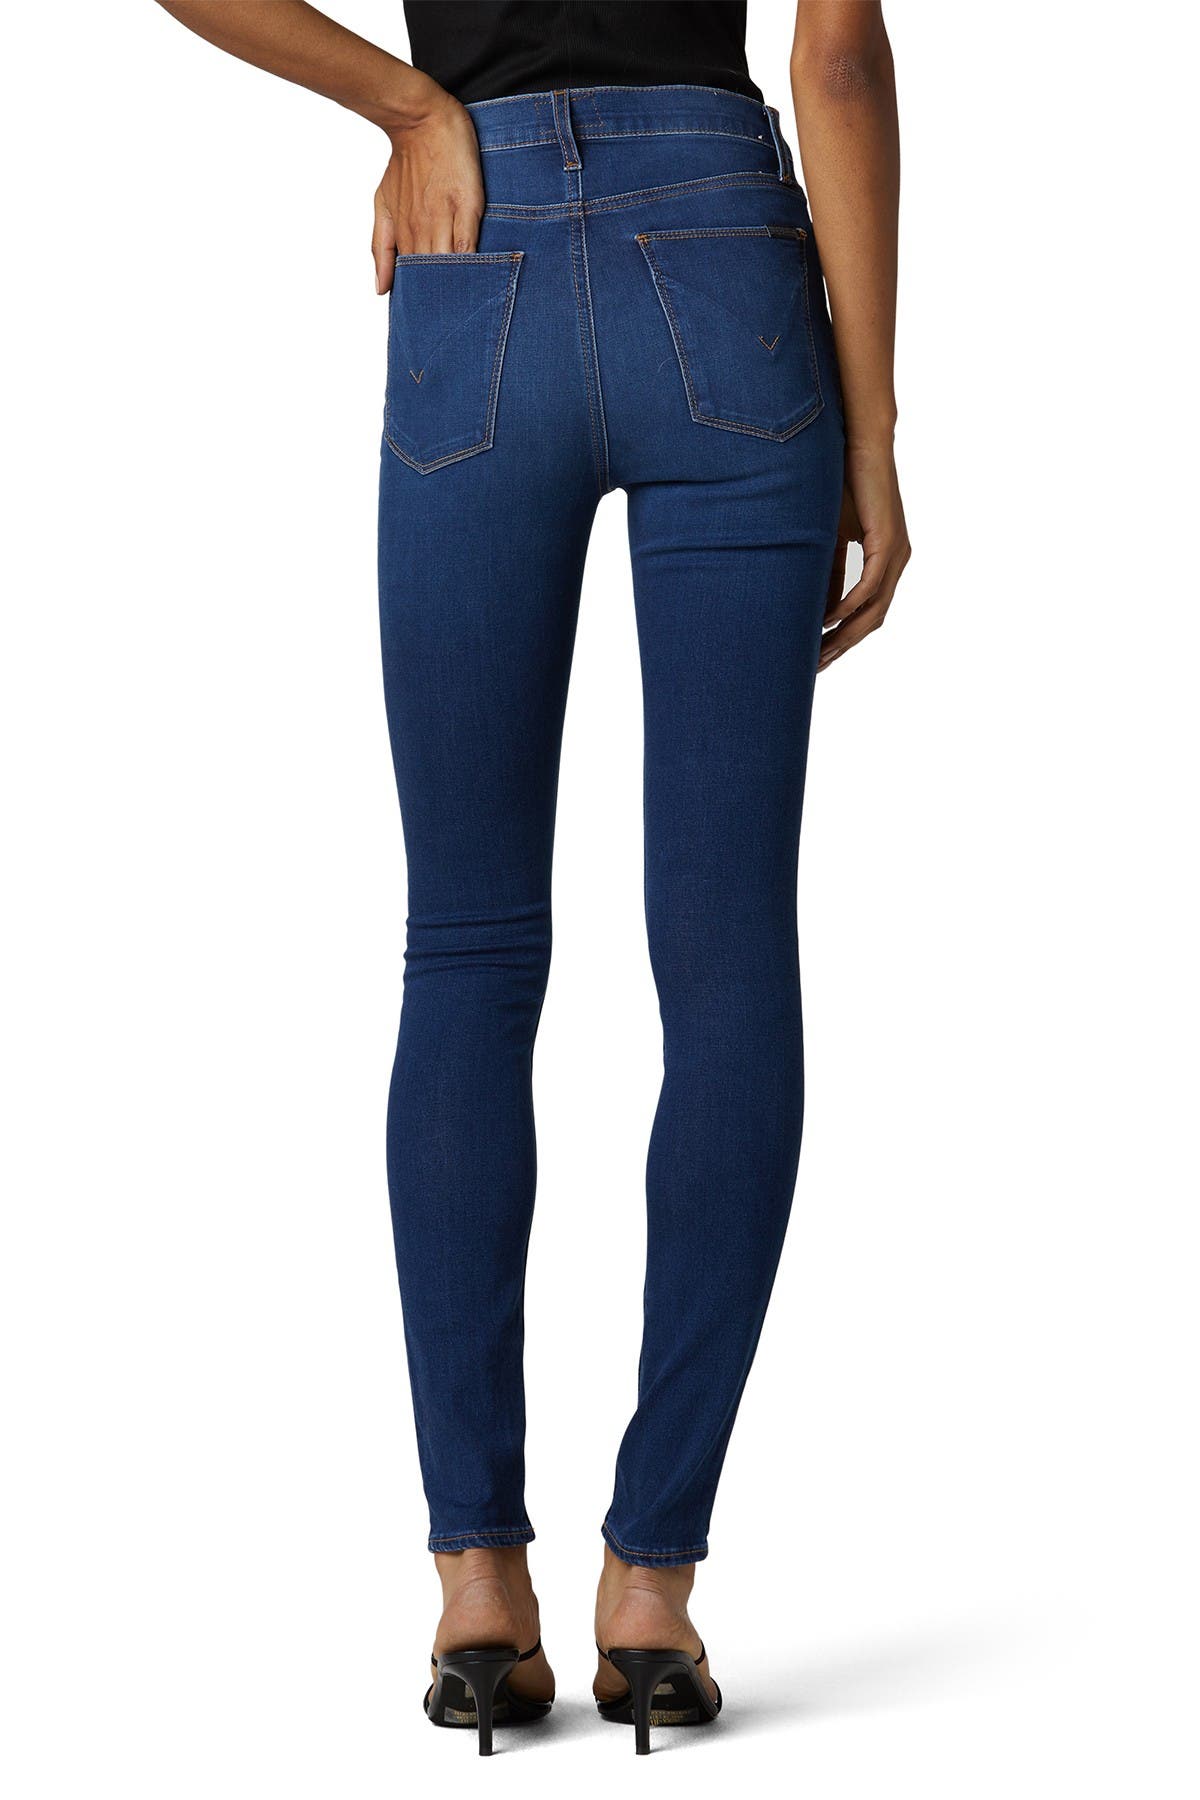 HUDSON Jeans | Blair High Waist Super Skinny Jeans | Nordstrom Rack